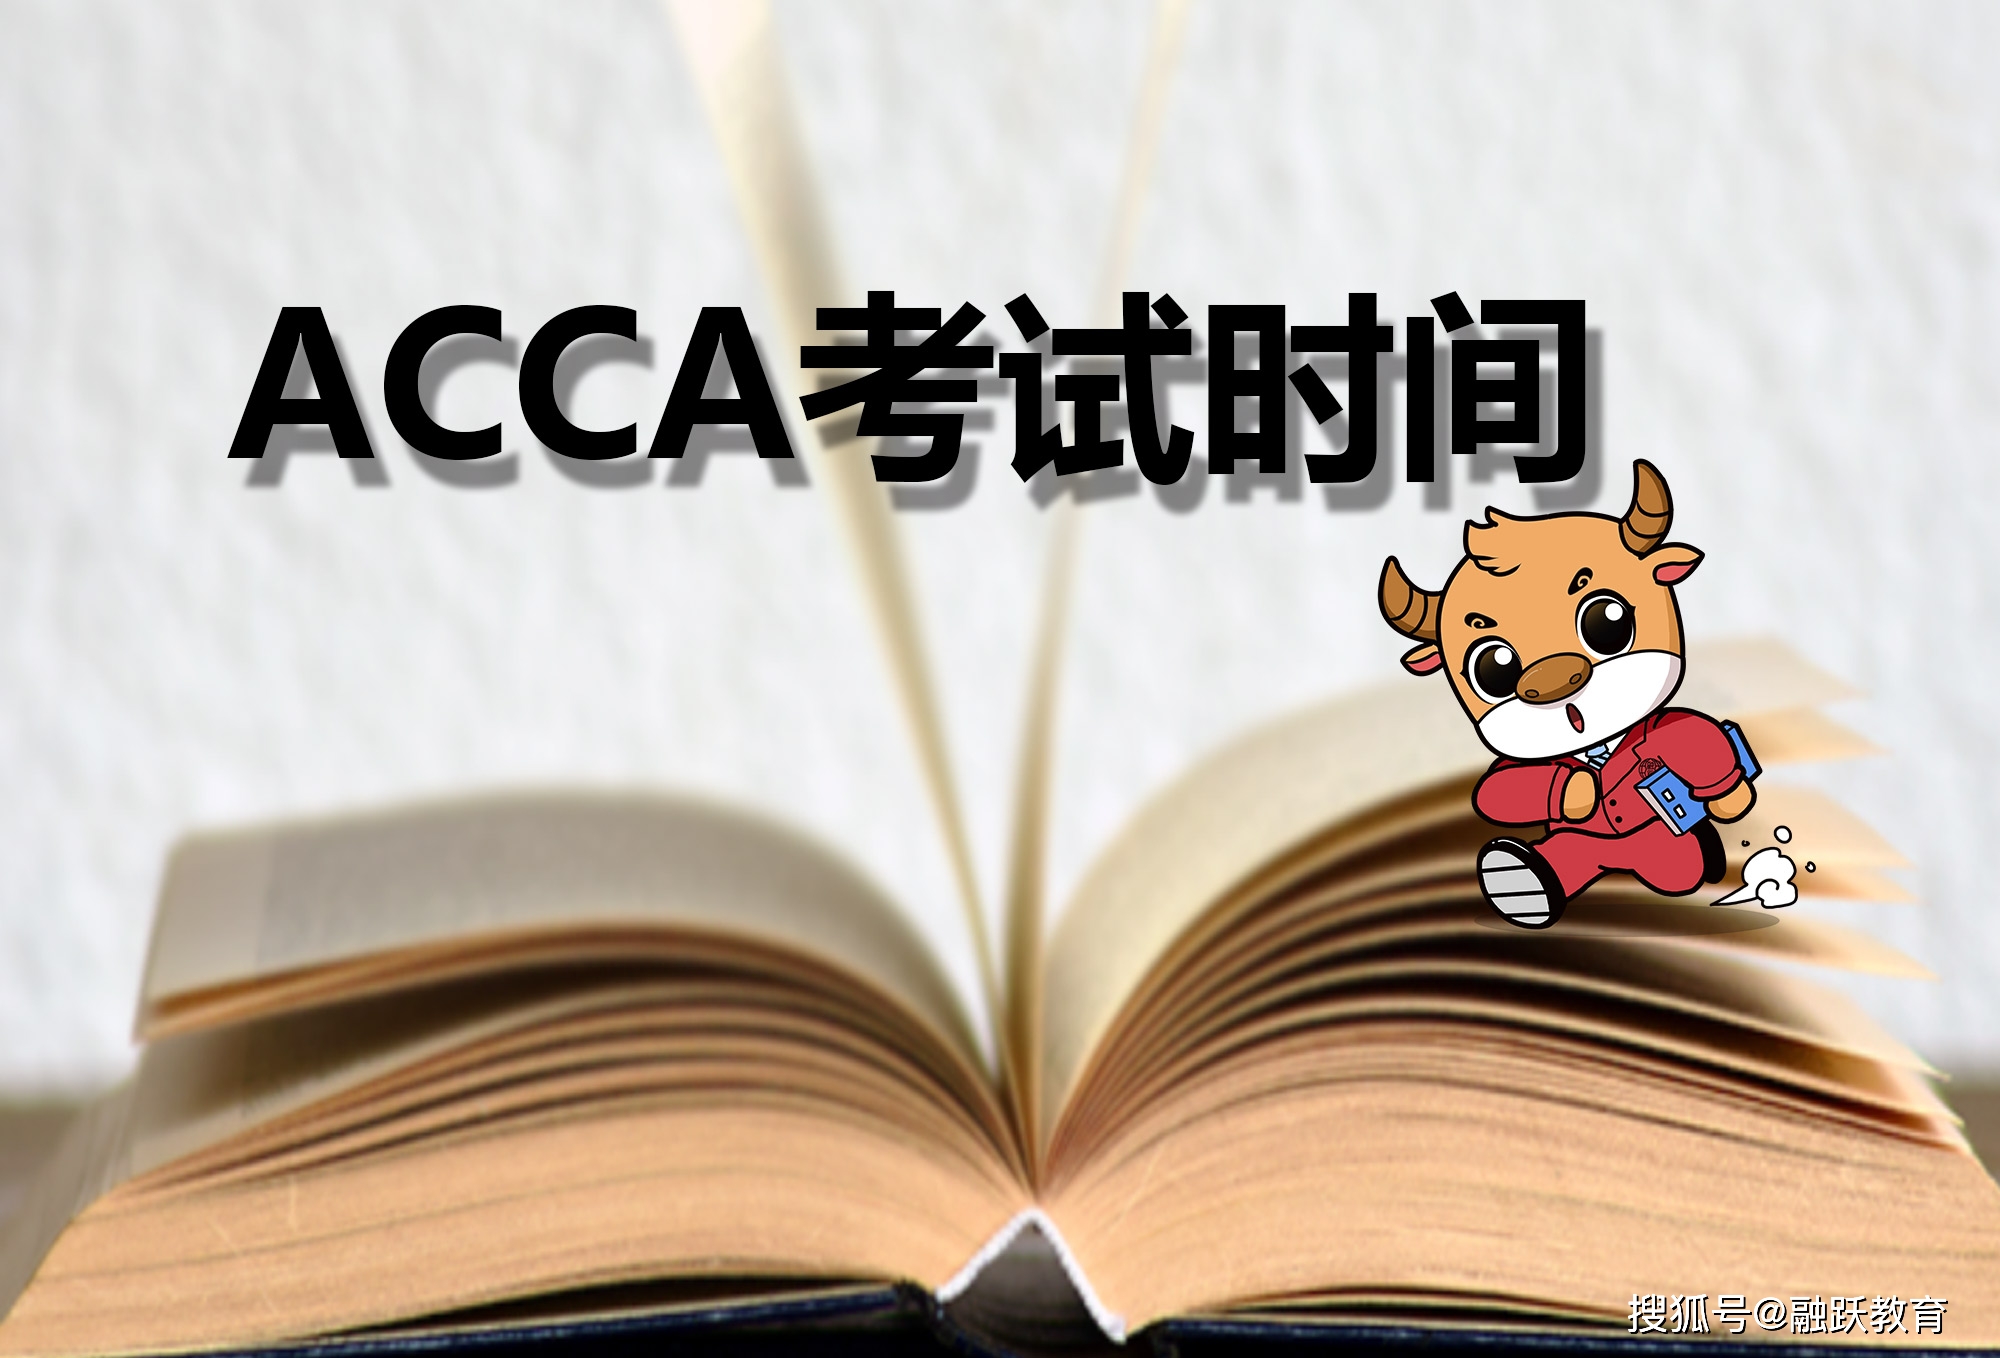 ACCA注册报名材料有哪些？